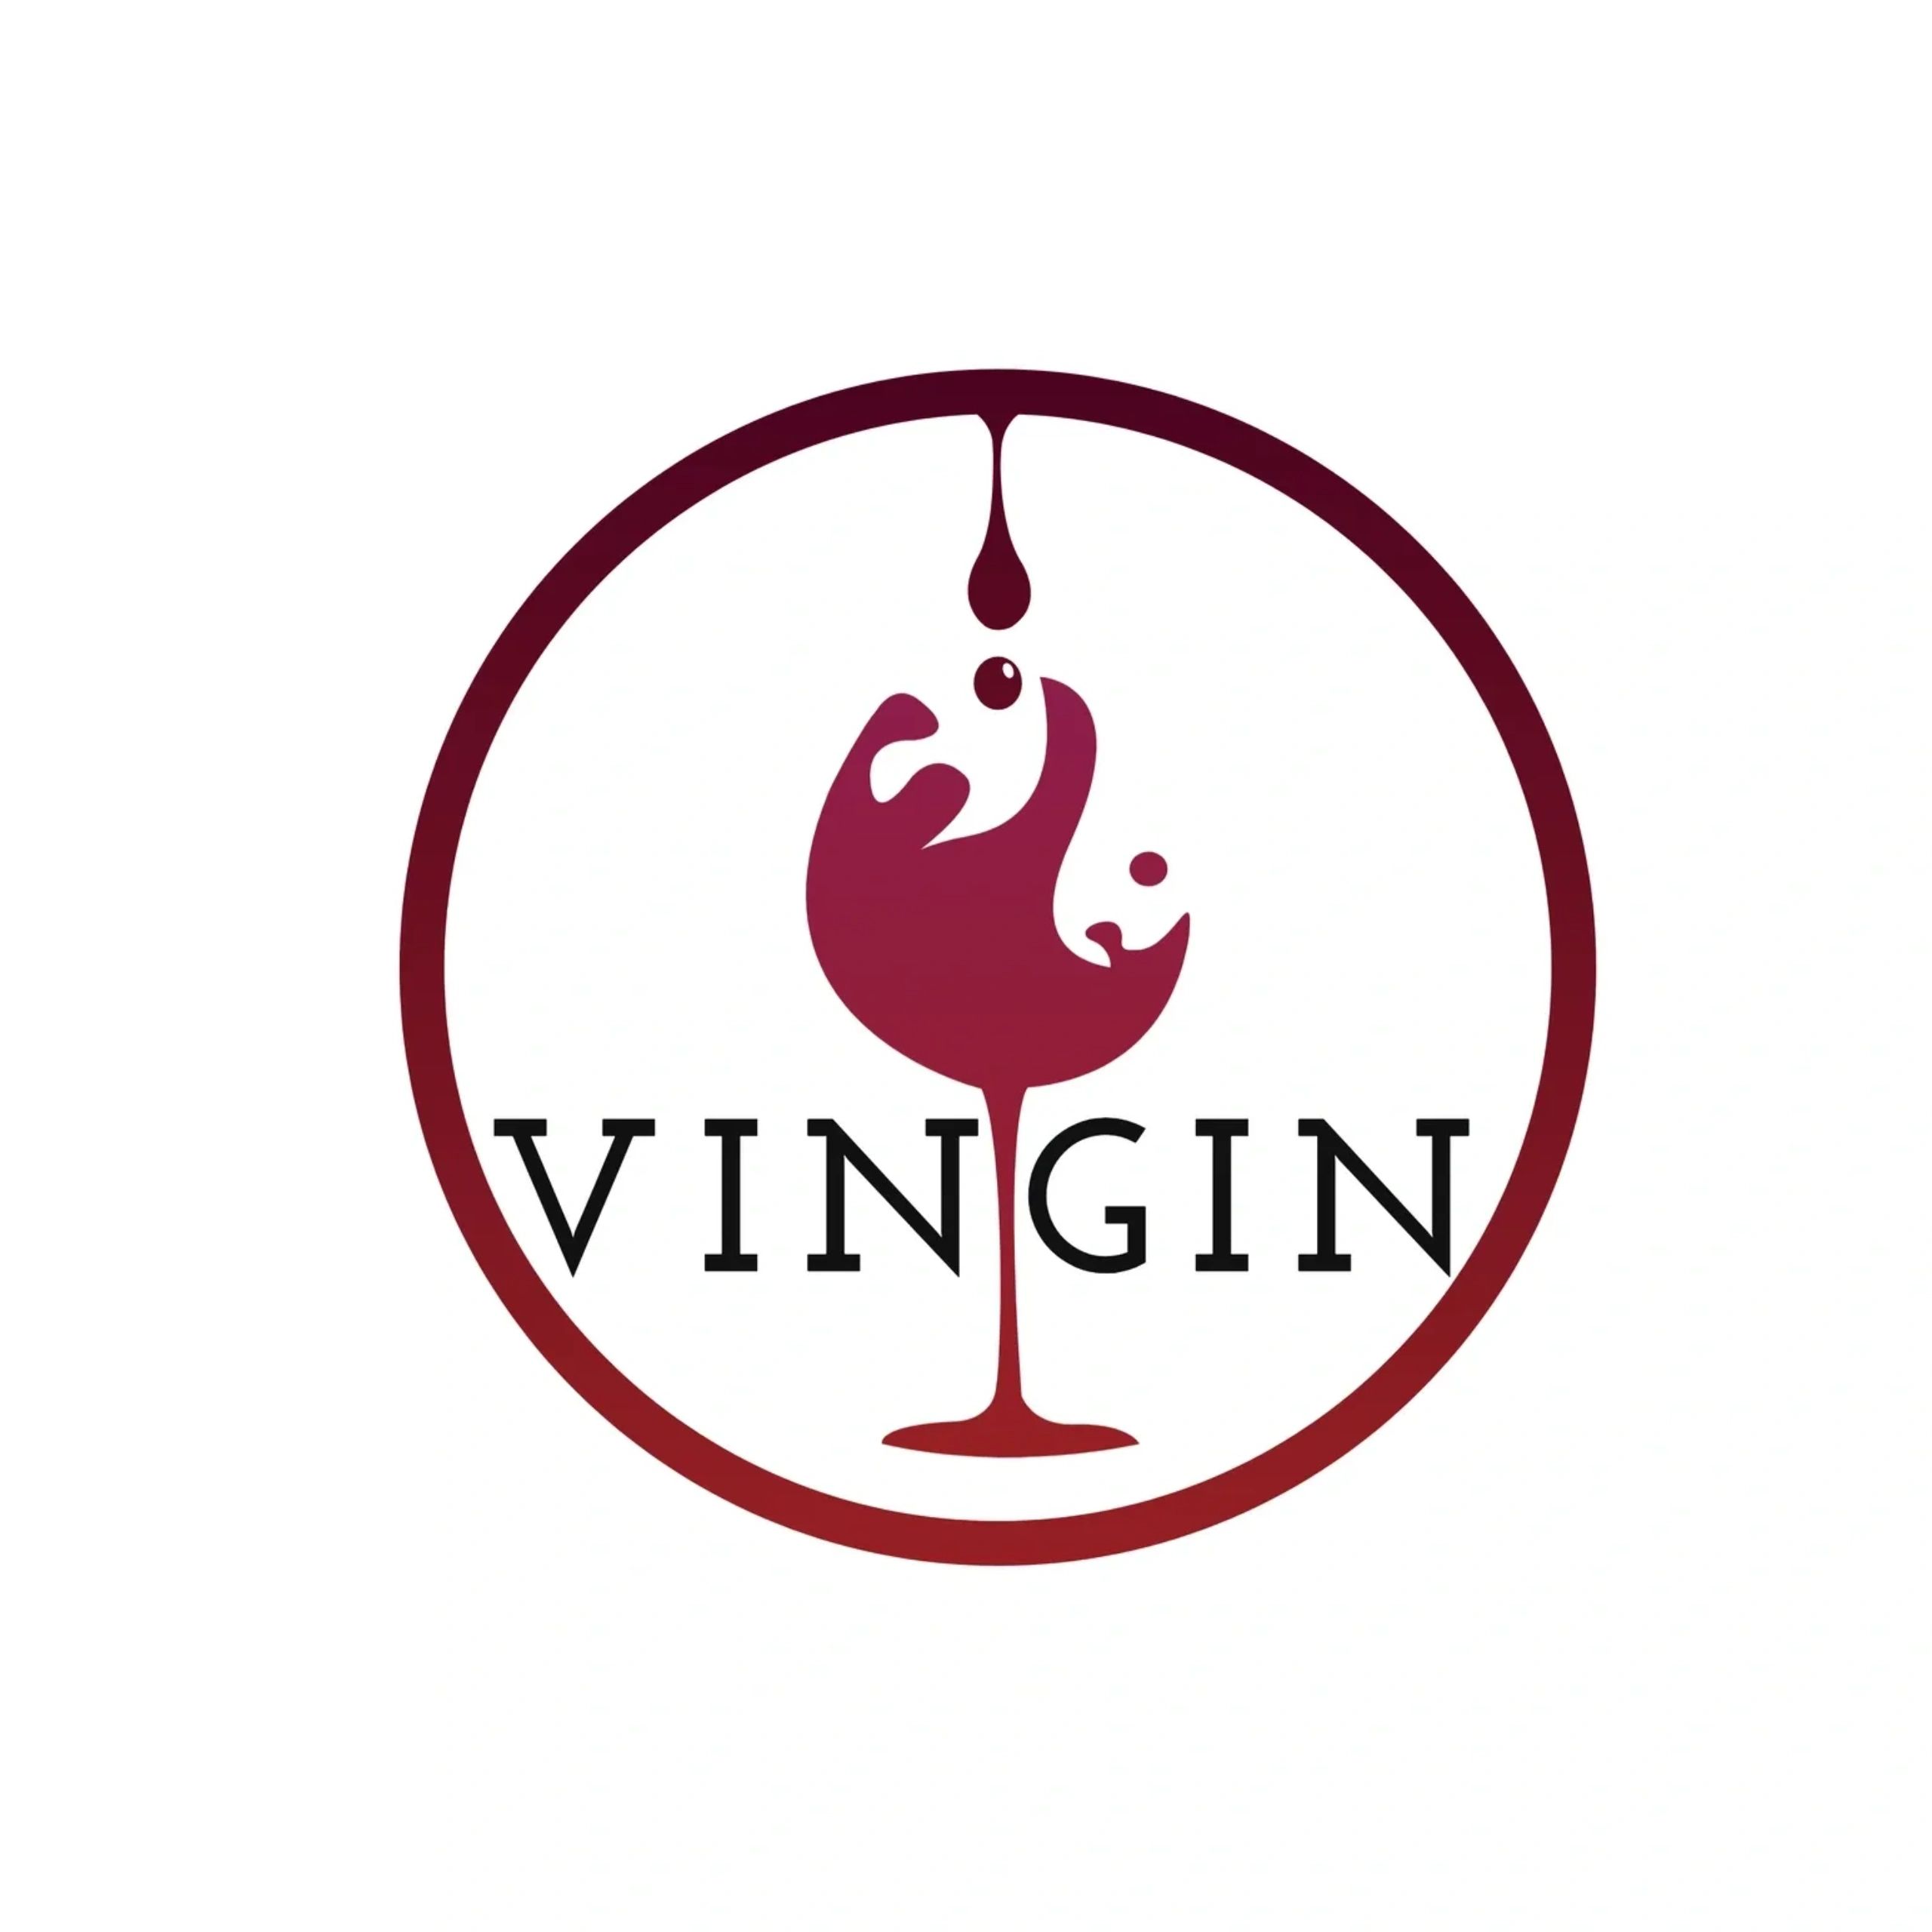 VINGIN logo, wine and gin tasting events